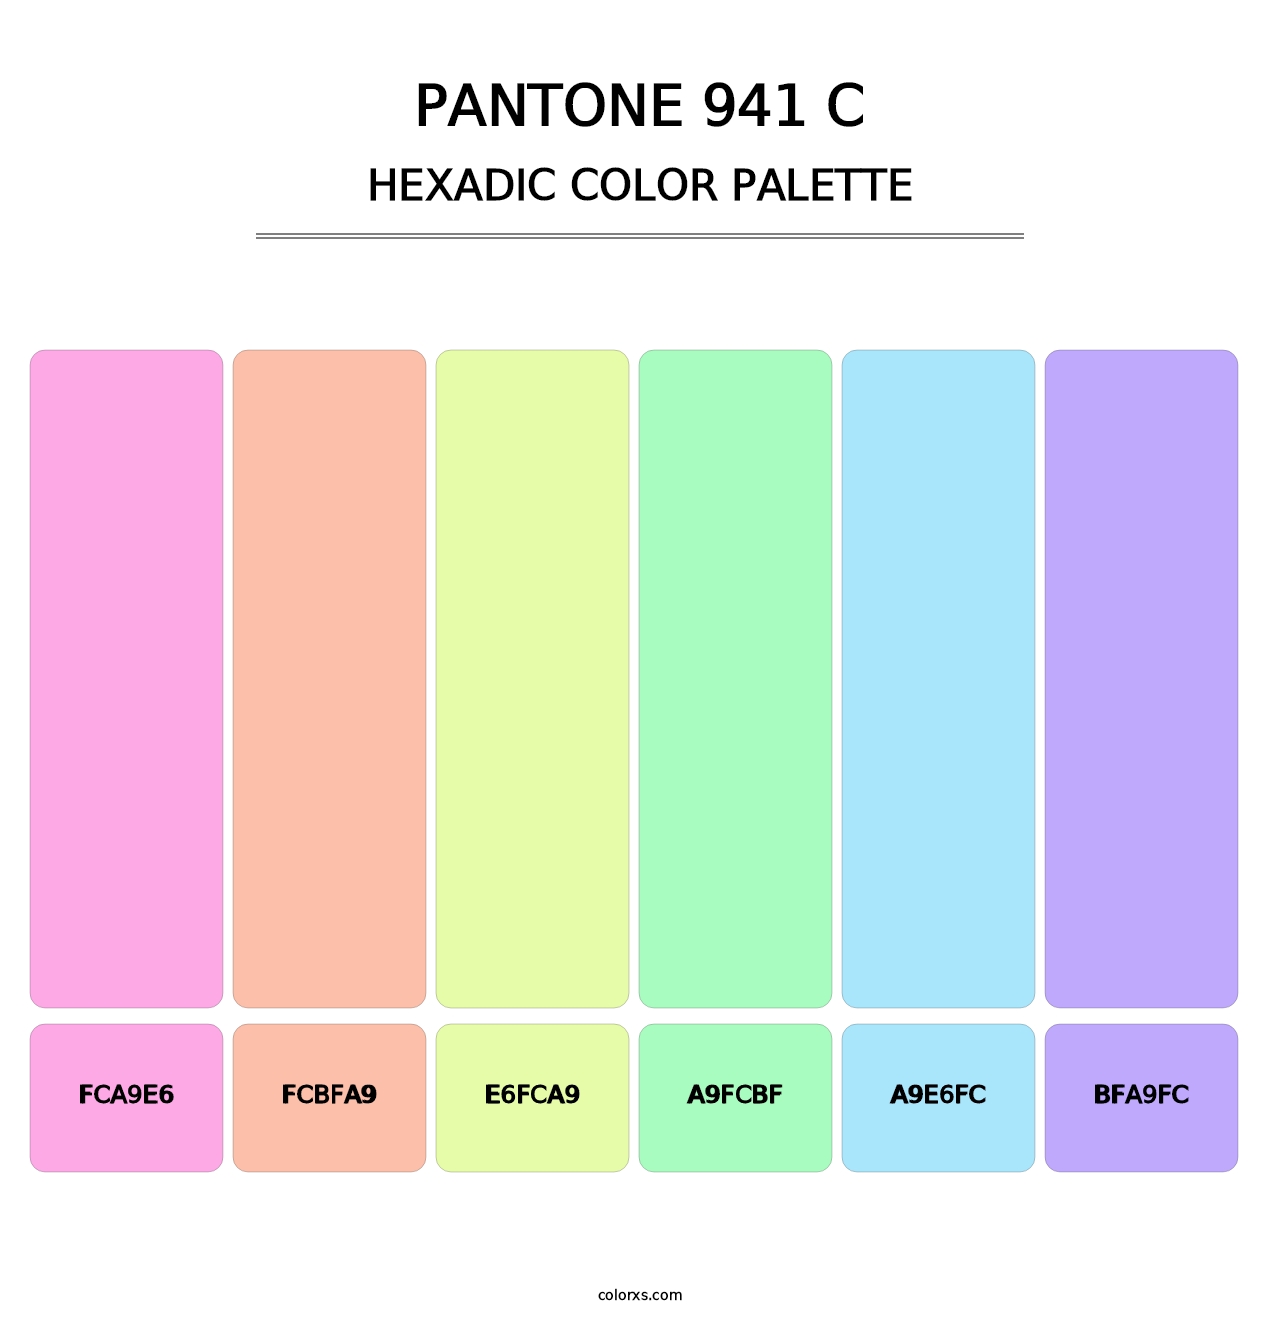 PANTONE 941 C - Hexadic Color Palette